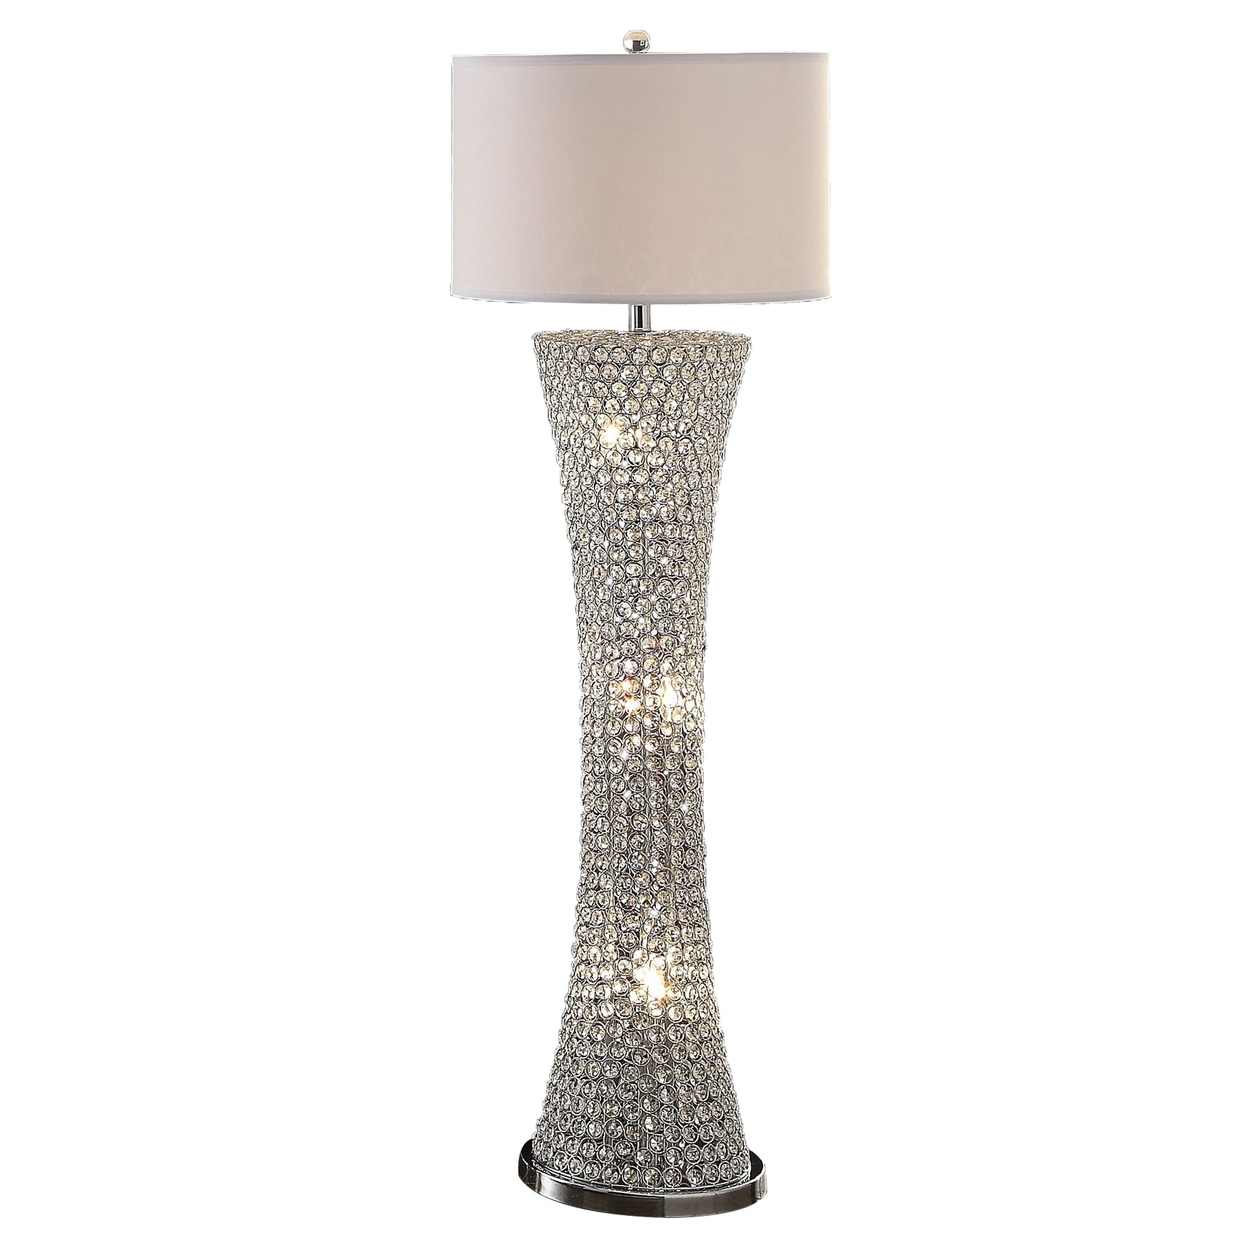 Wren 54 Inch Floor Lamp, Crystal Base With Subtle Curve, Metal, Silver -Saltoro Sherpi